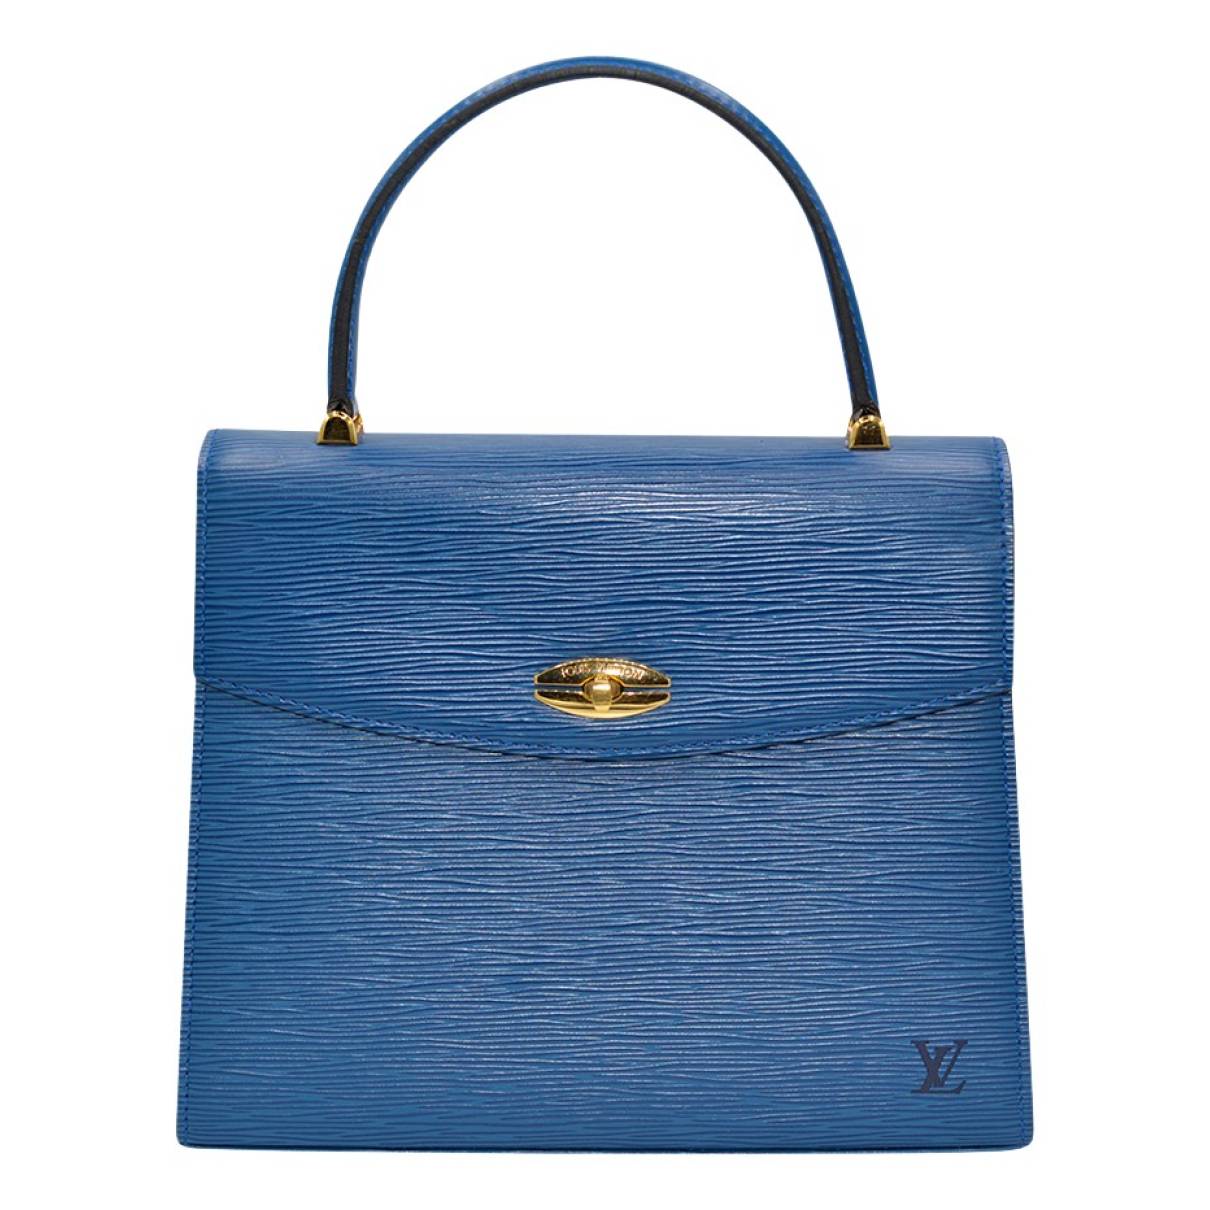 Malesherbes leather handbag Louis Vuitton